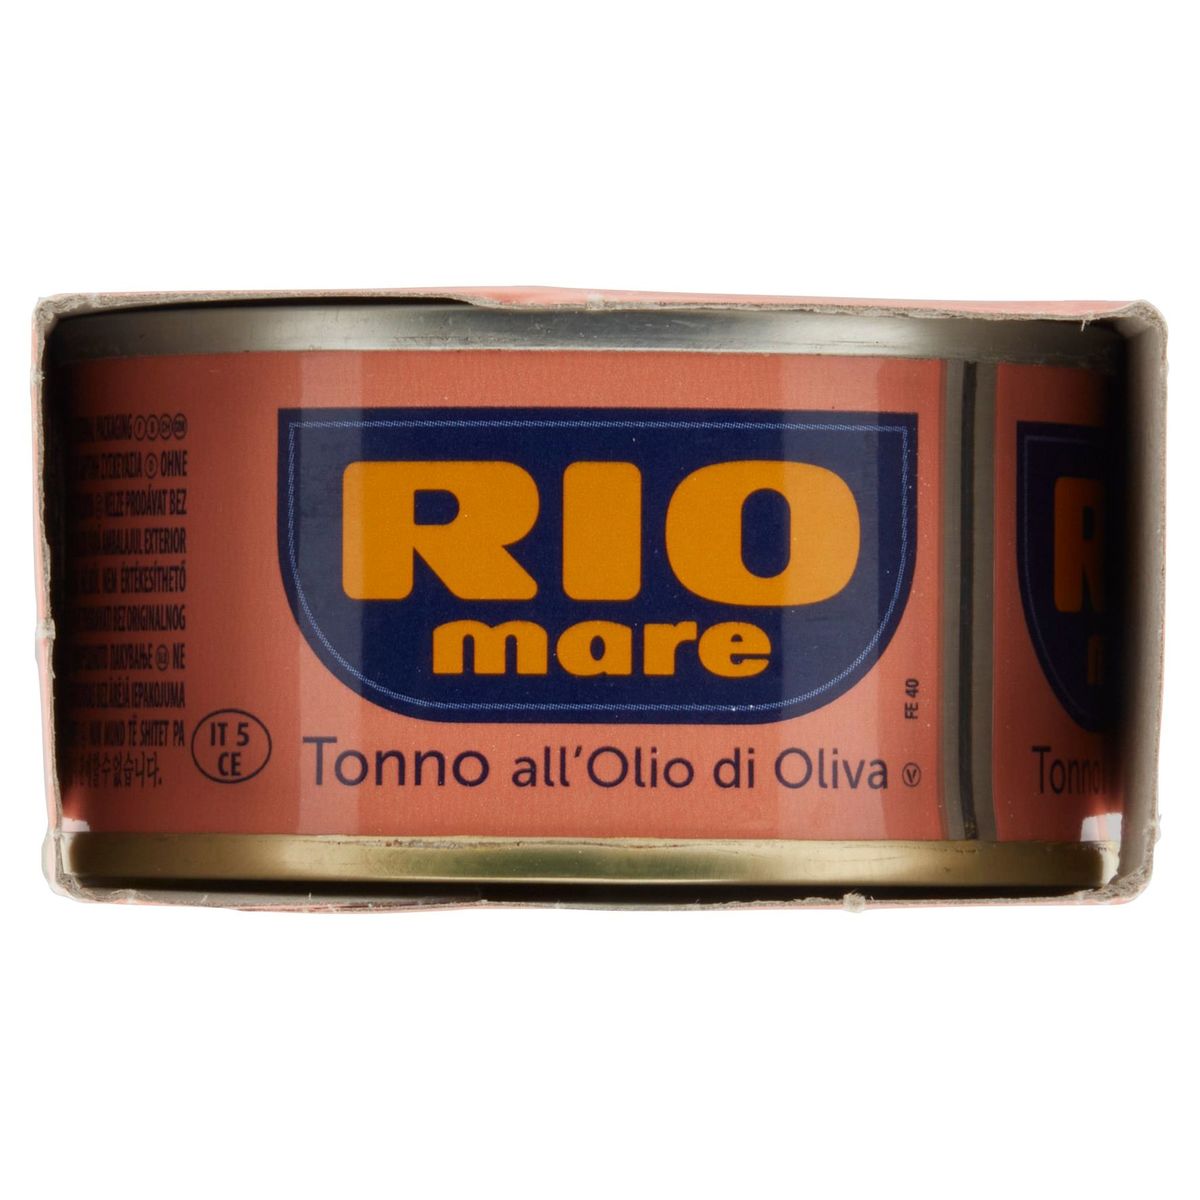 Rio Mare Thon à l'Huile d'Olive 3 x 80 g